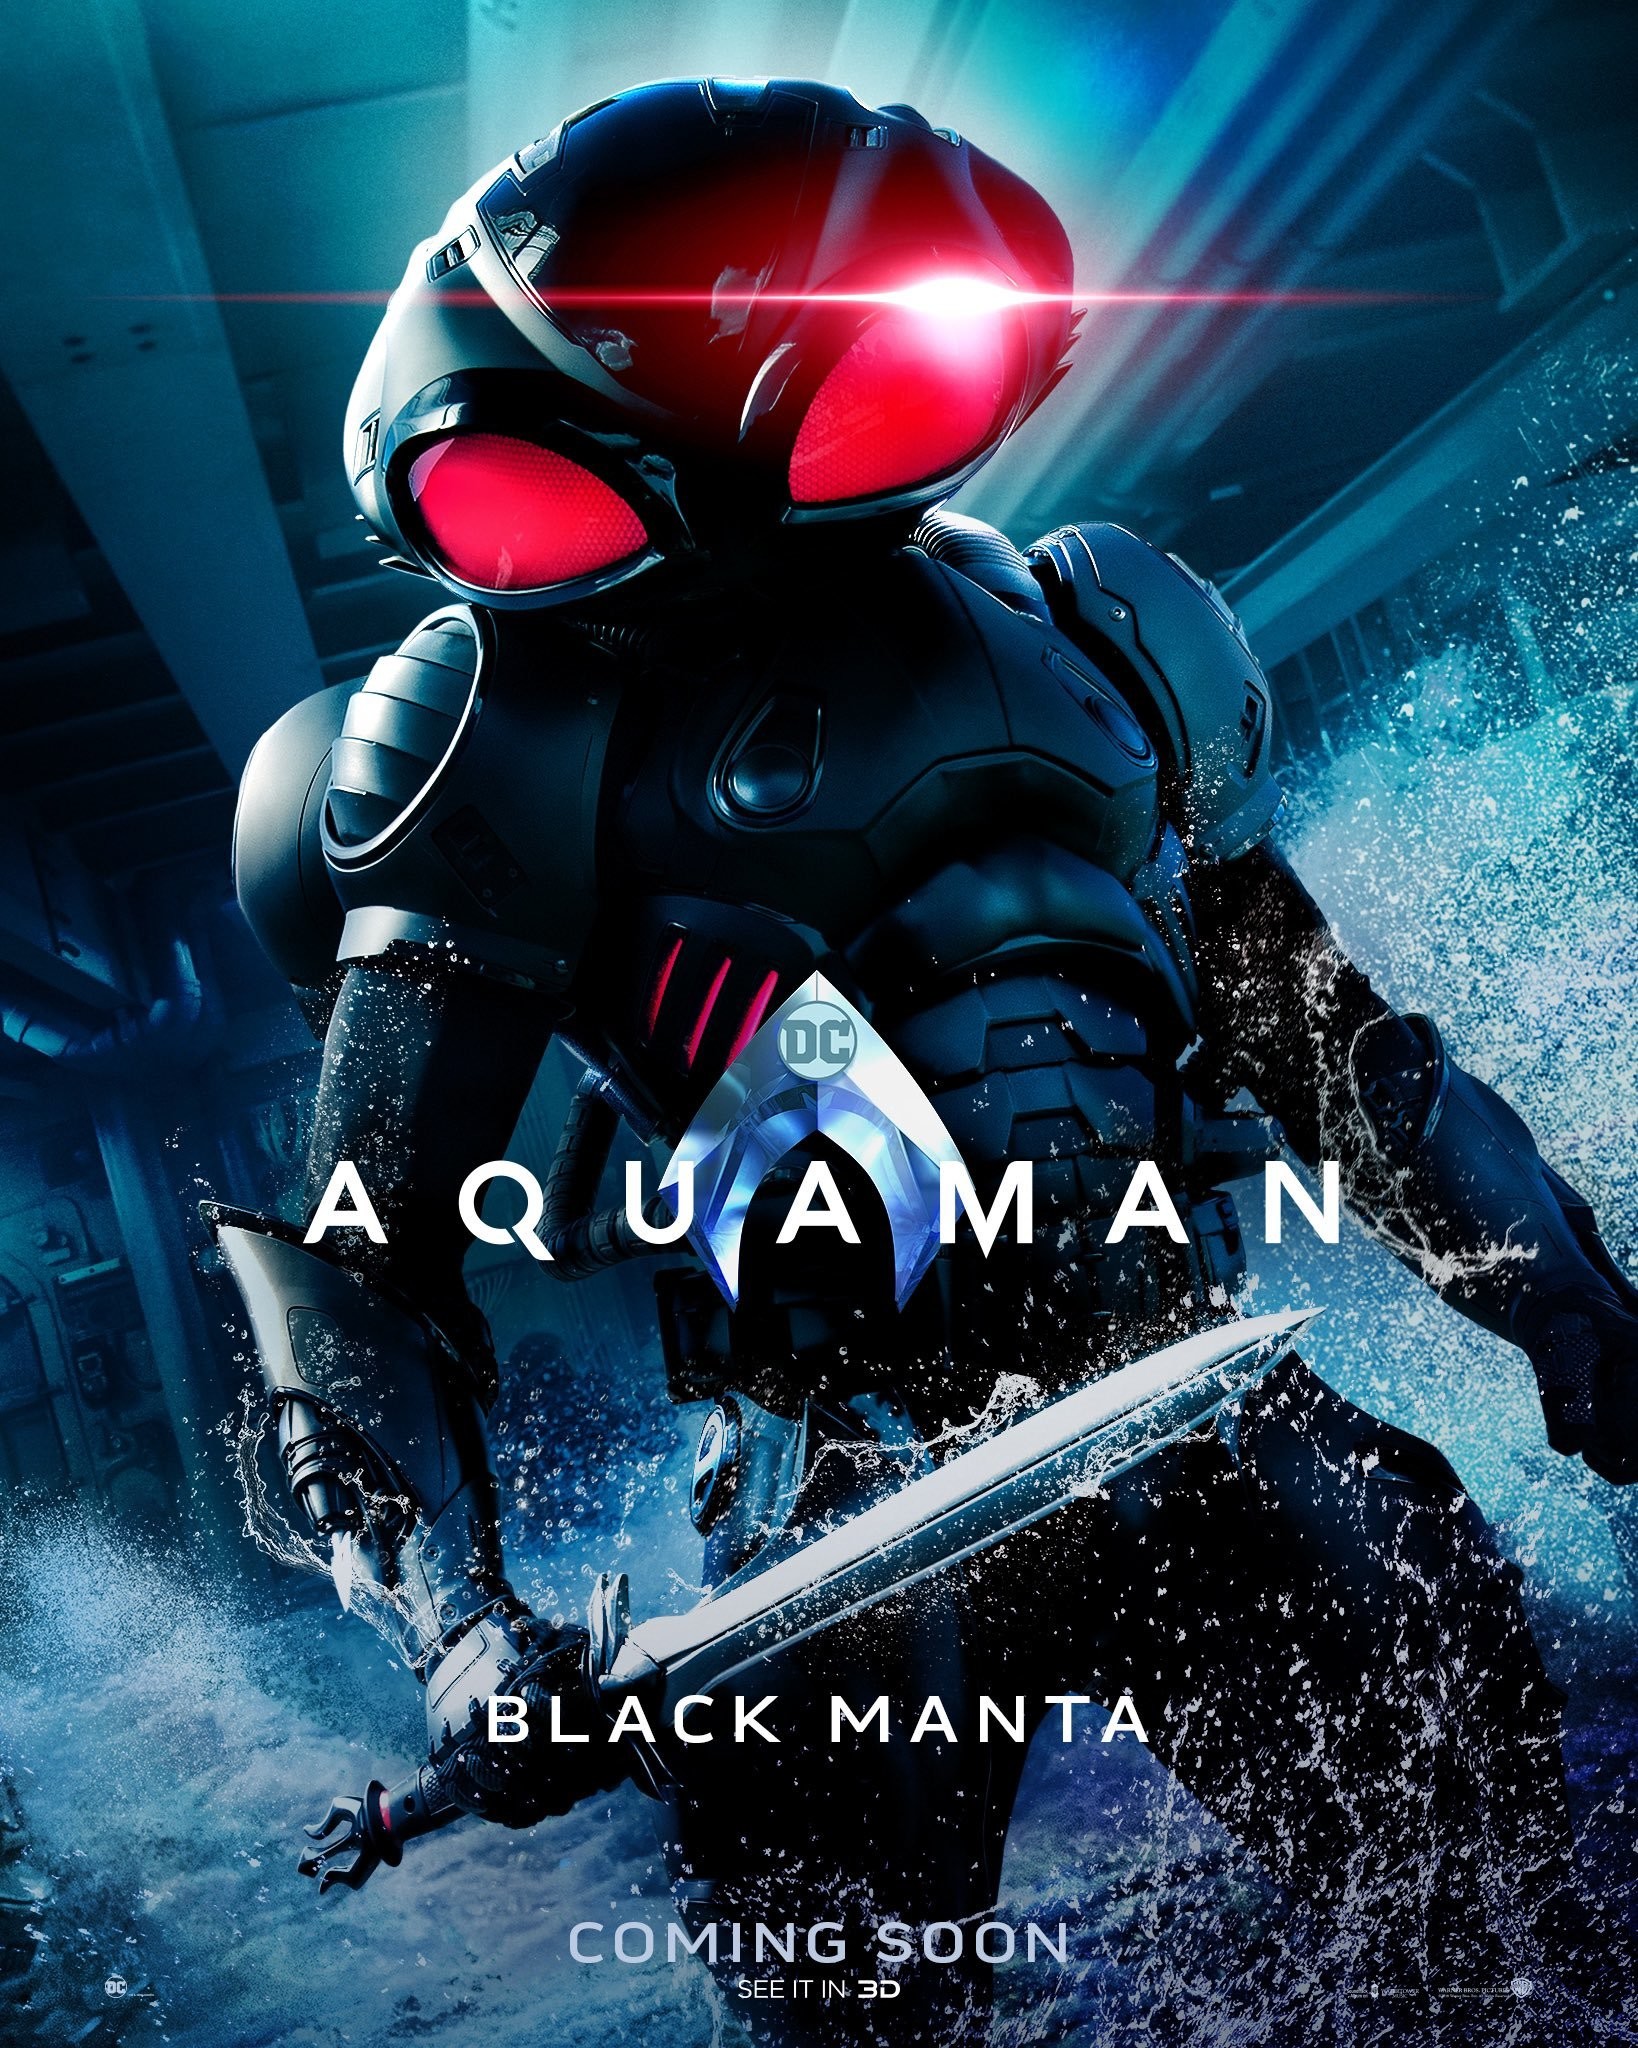 1638x2048 Aquaman images Black Manta HD wallpaper and background photos